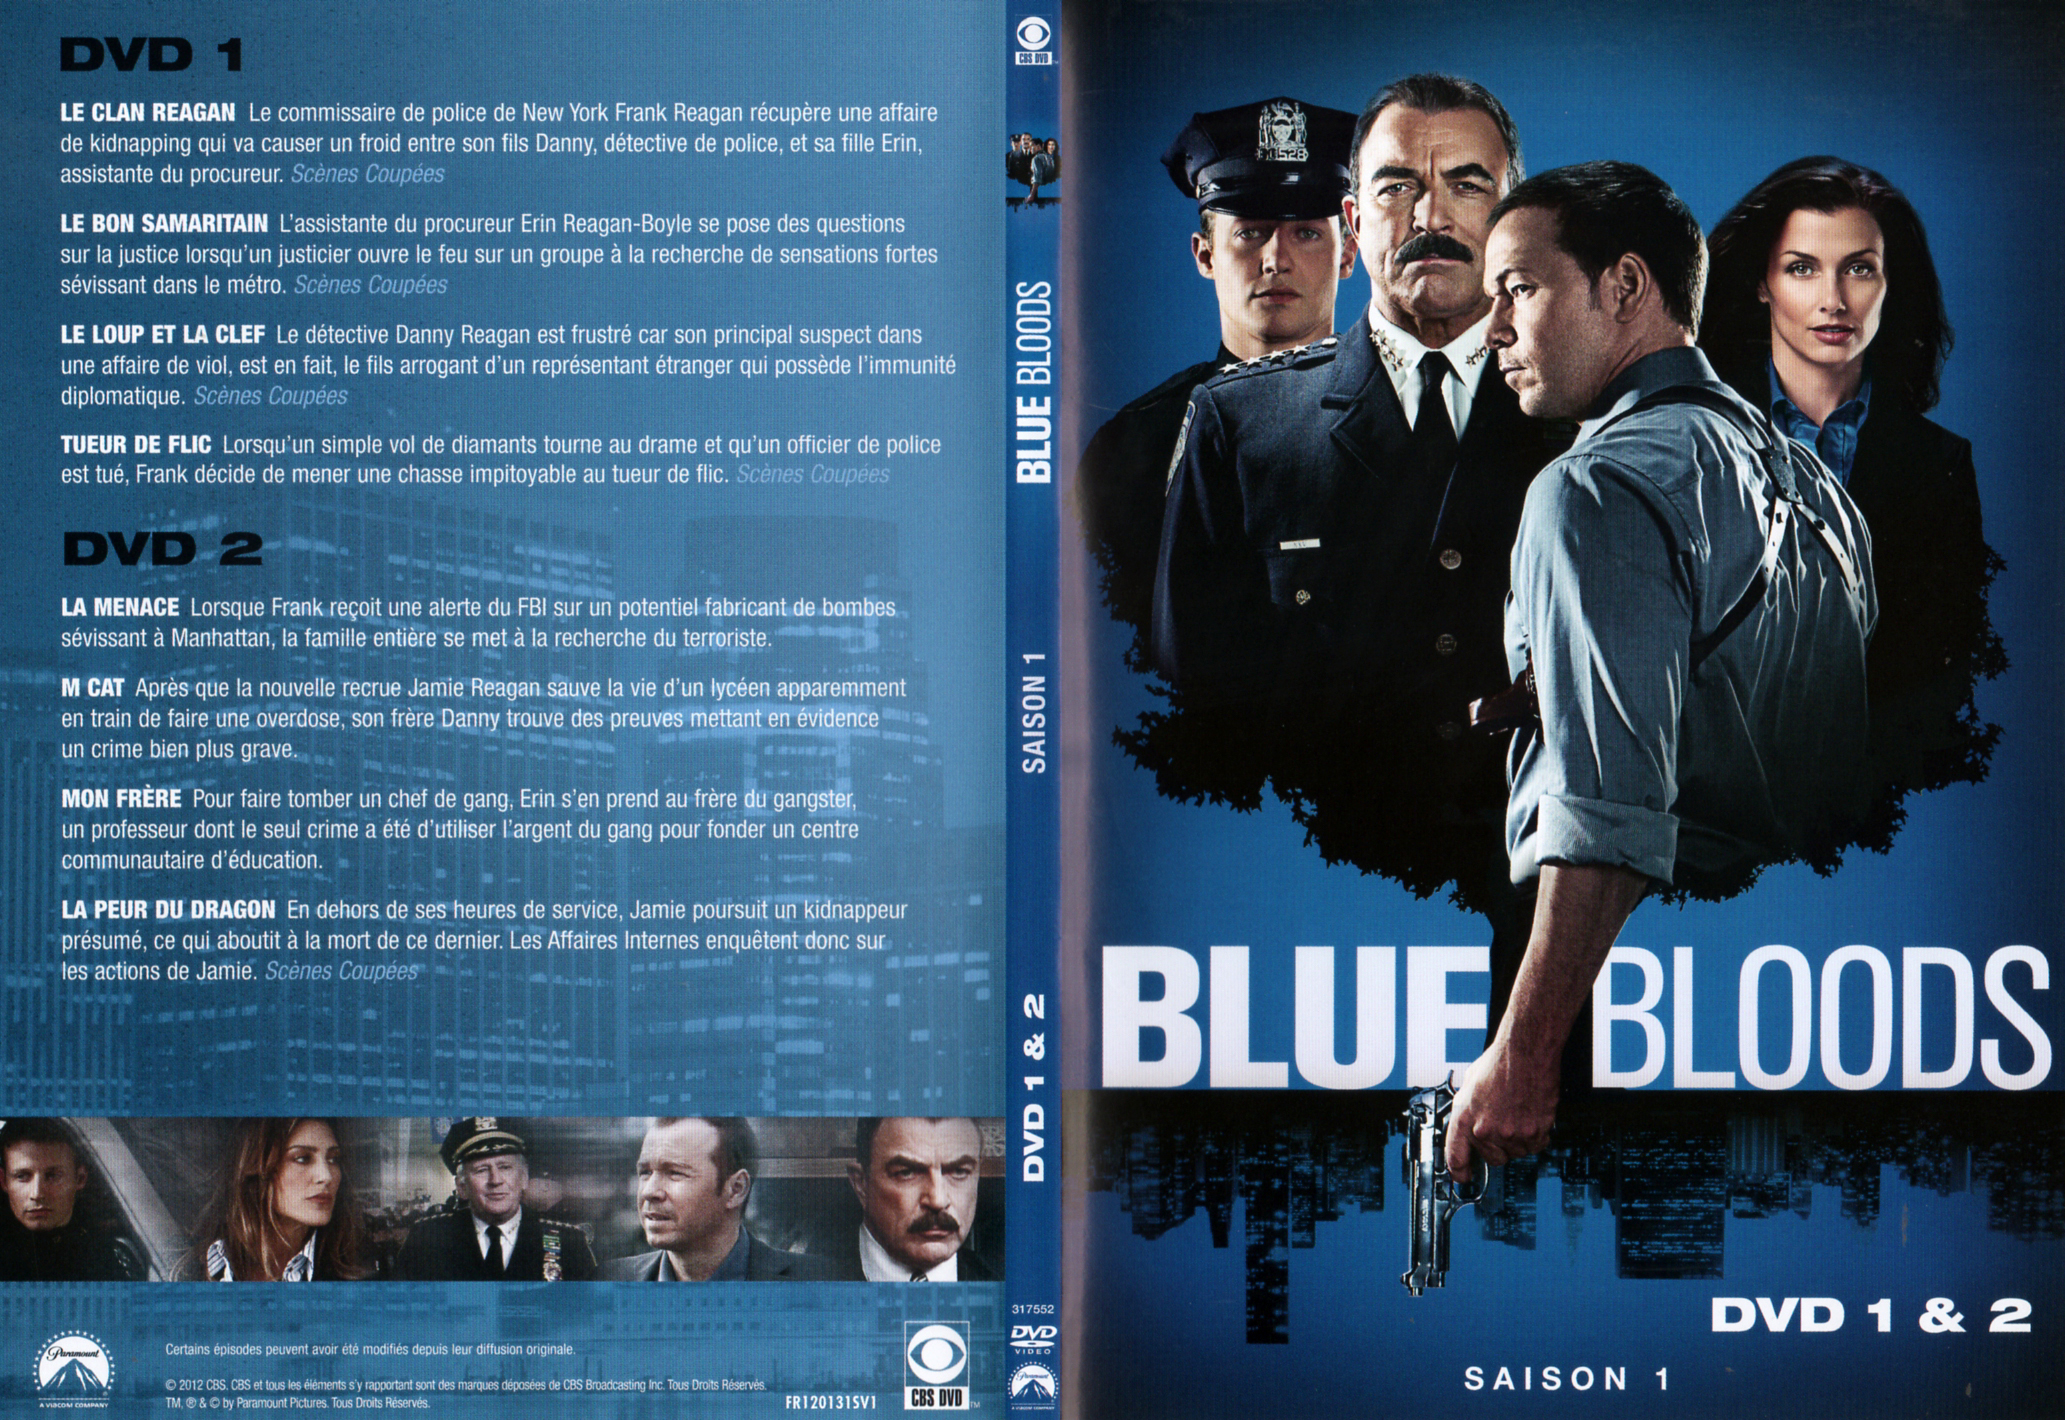 Jaquette DVD Blue Bloods Saison 1 DVD 1